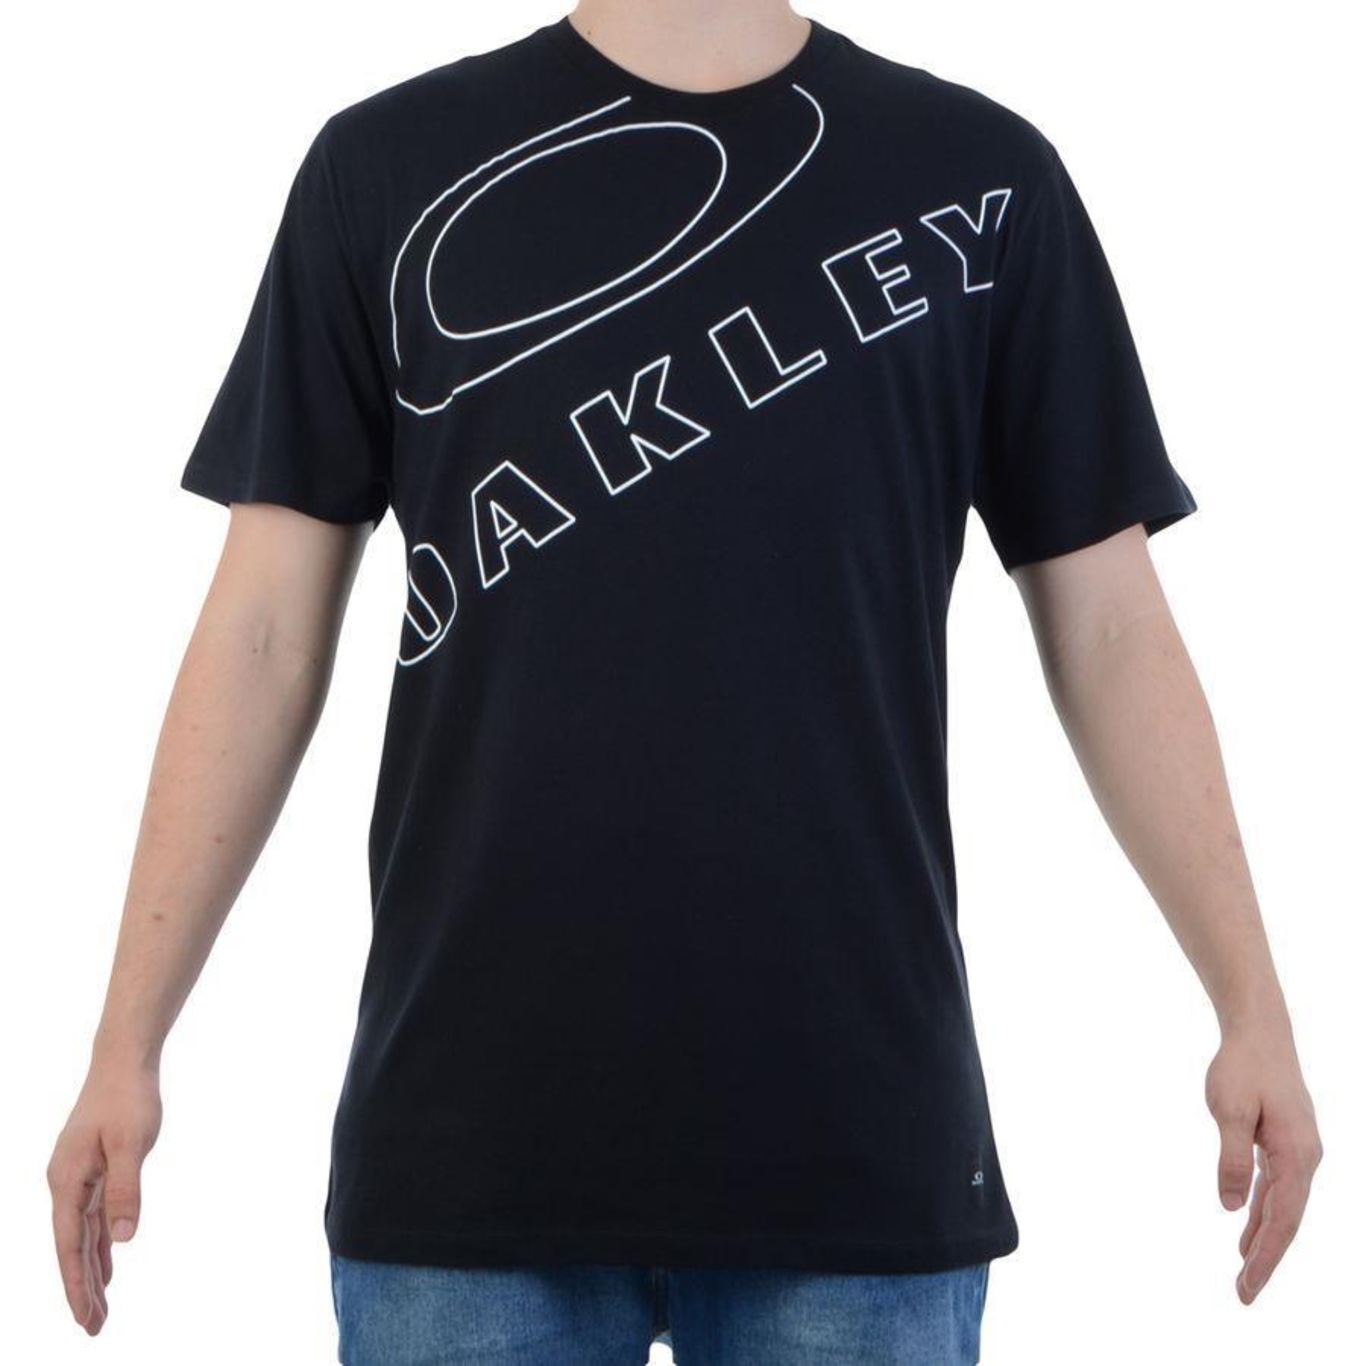 Camiseta Oakley Super Casual Preta - FutFanatics